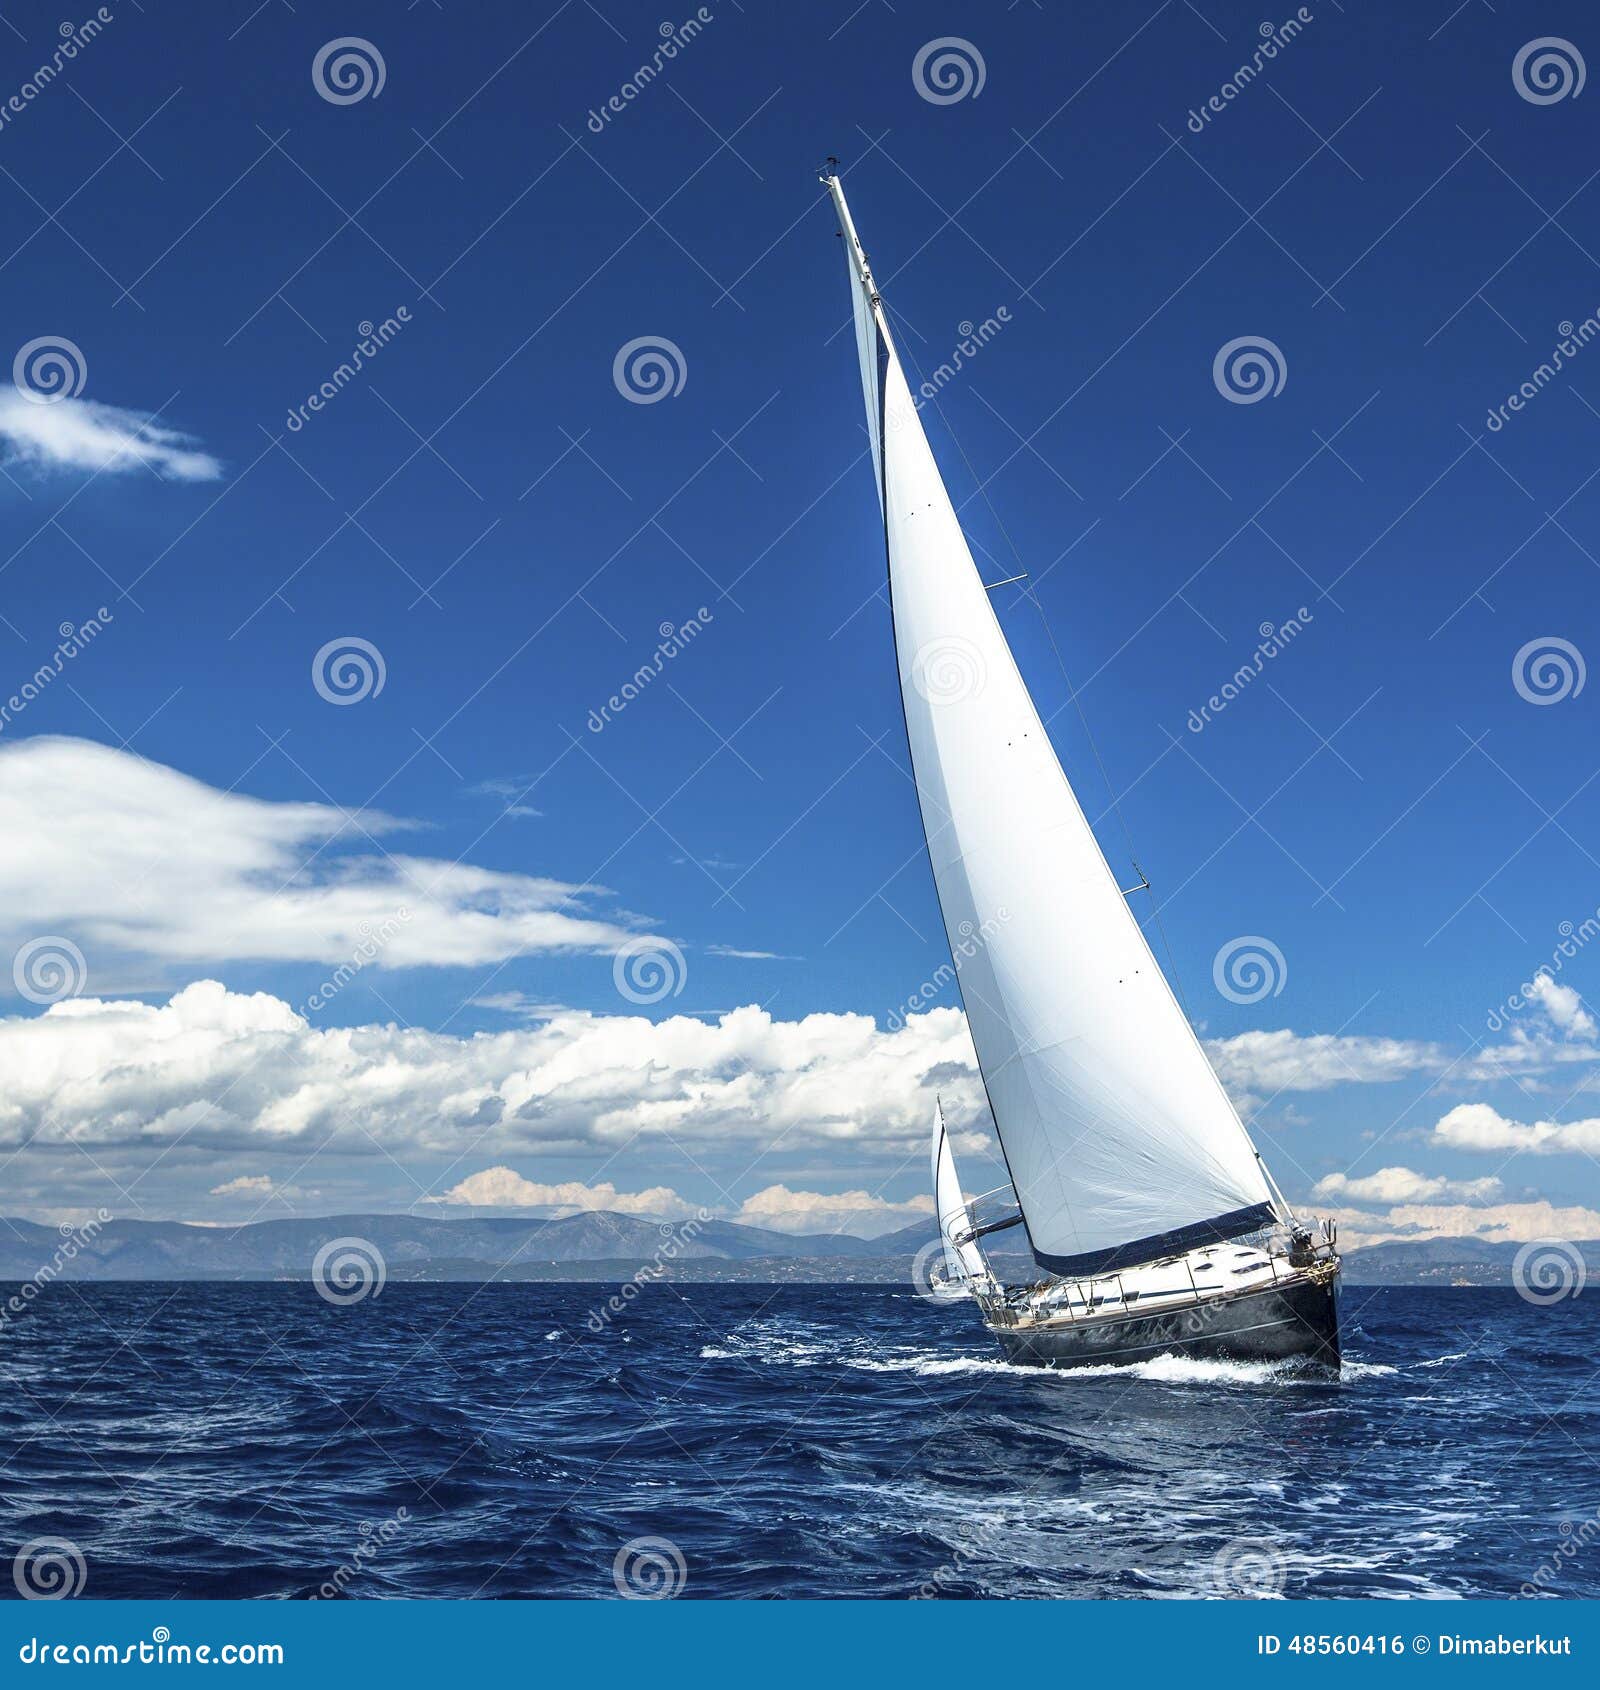 yacht sails with beautiful cloudless sky. sailing.